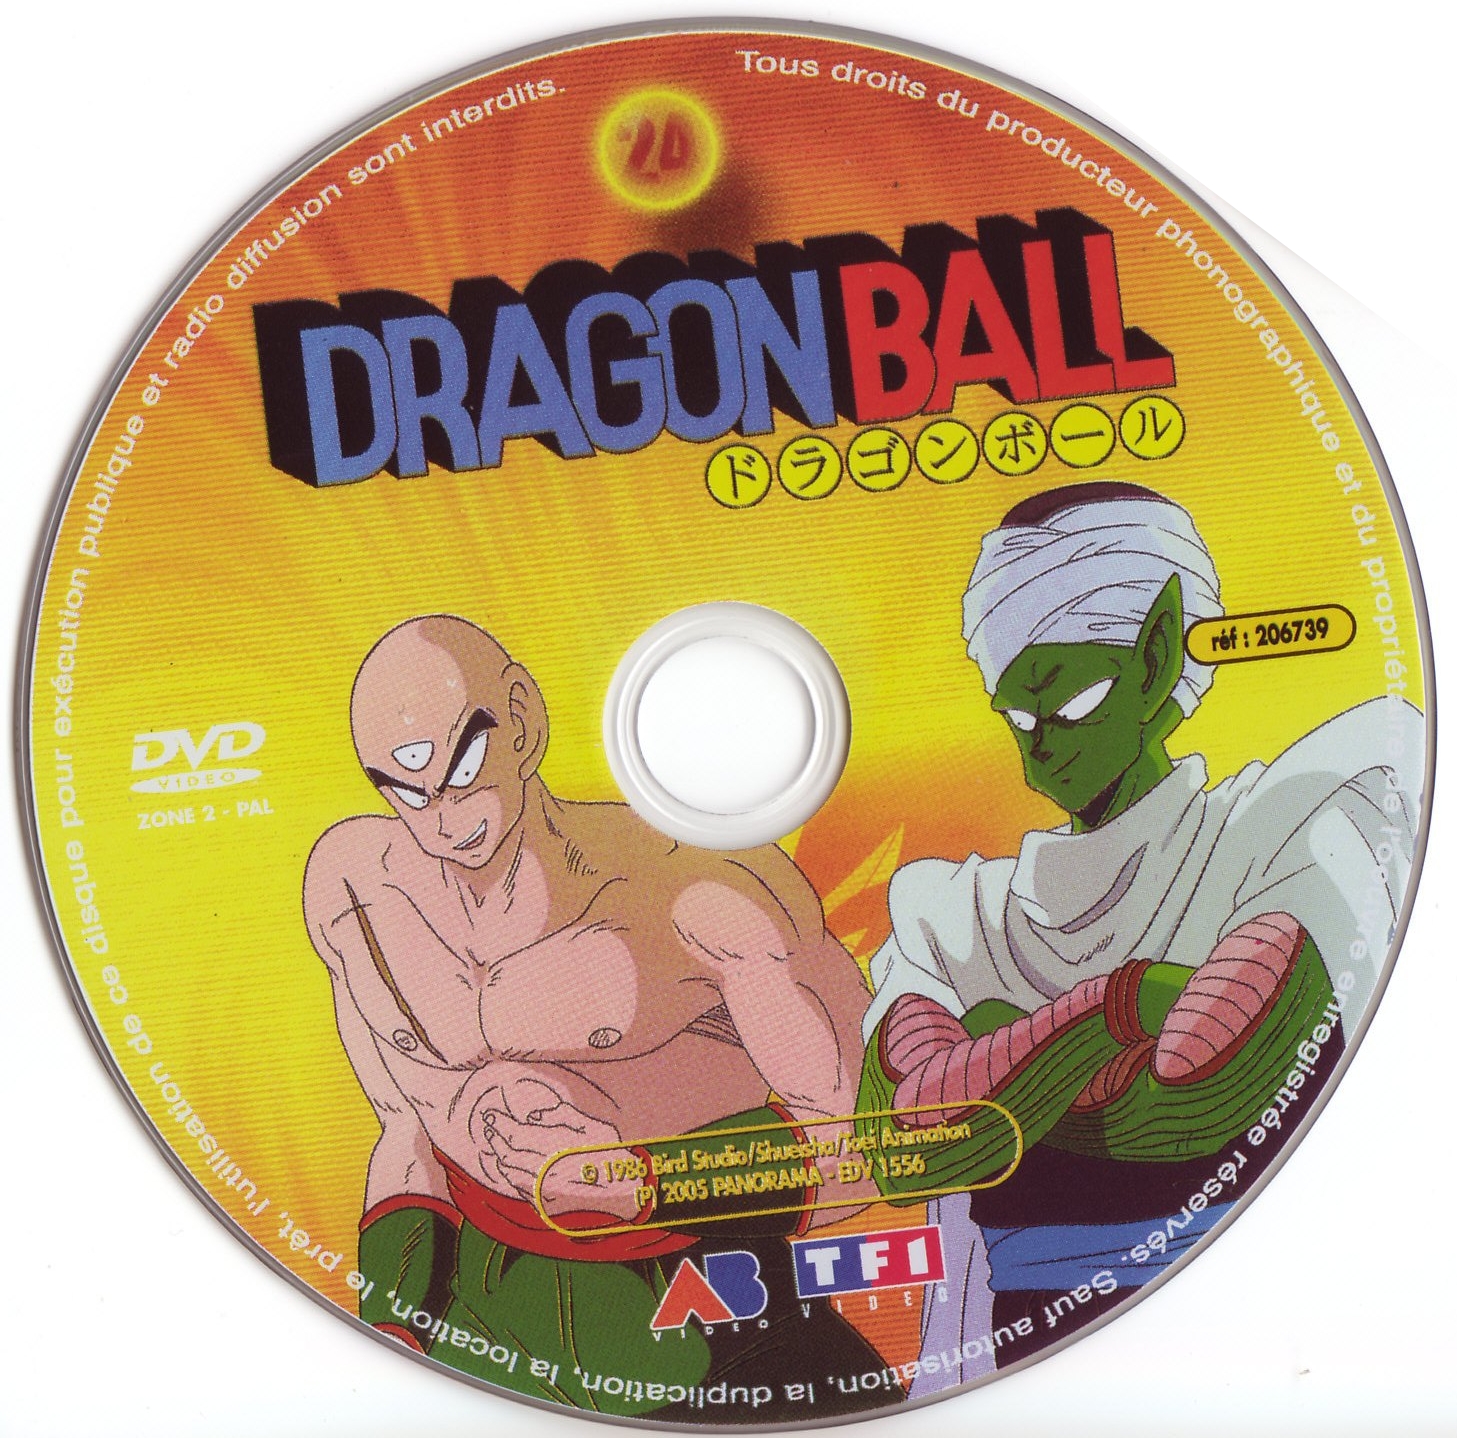 Dragon ball vol 24